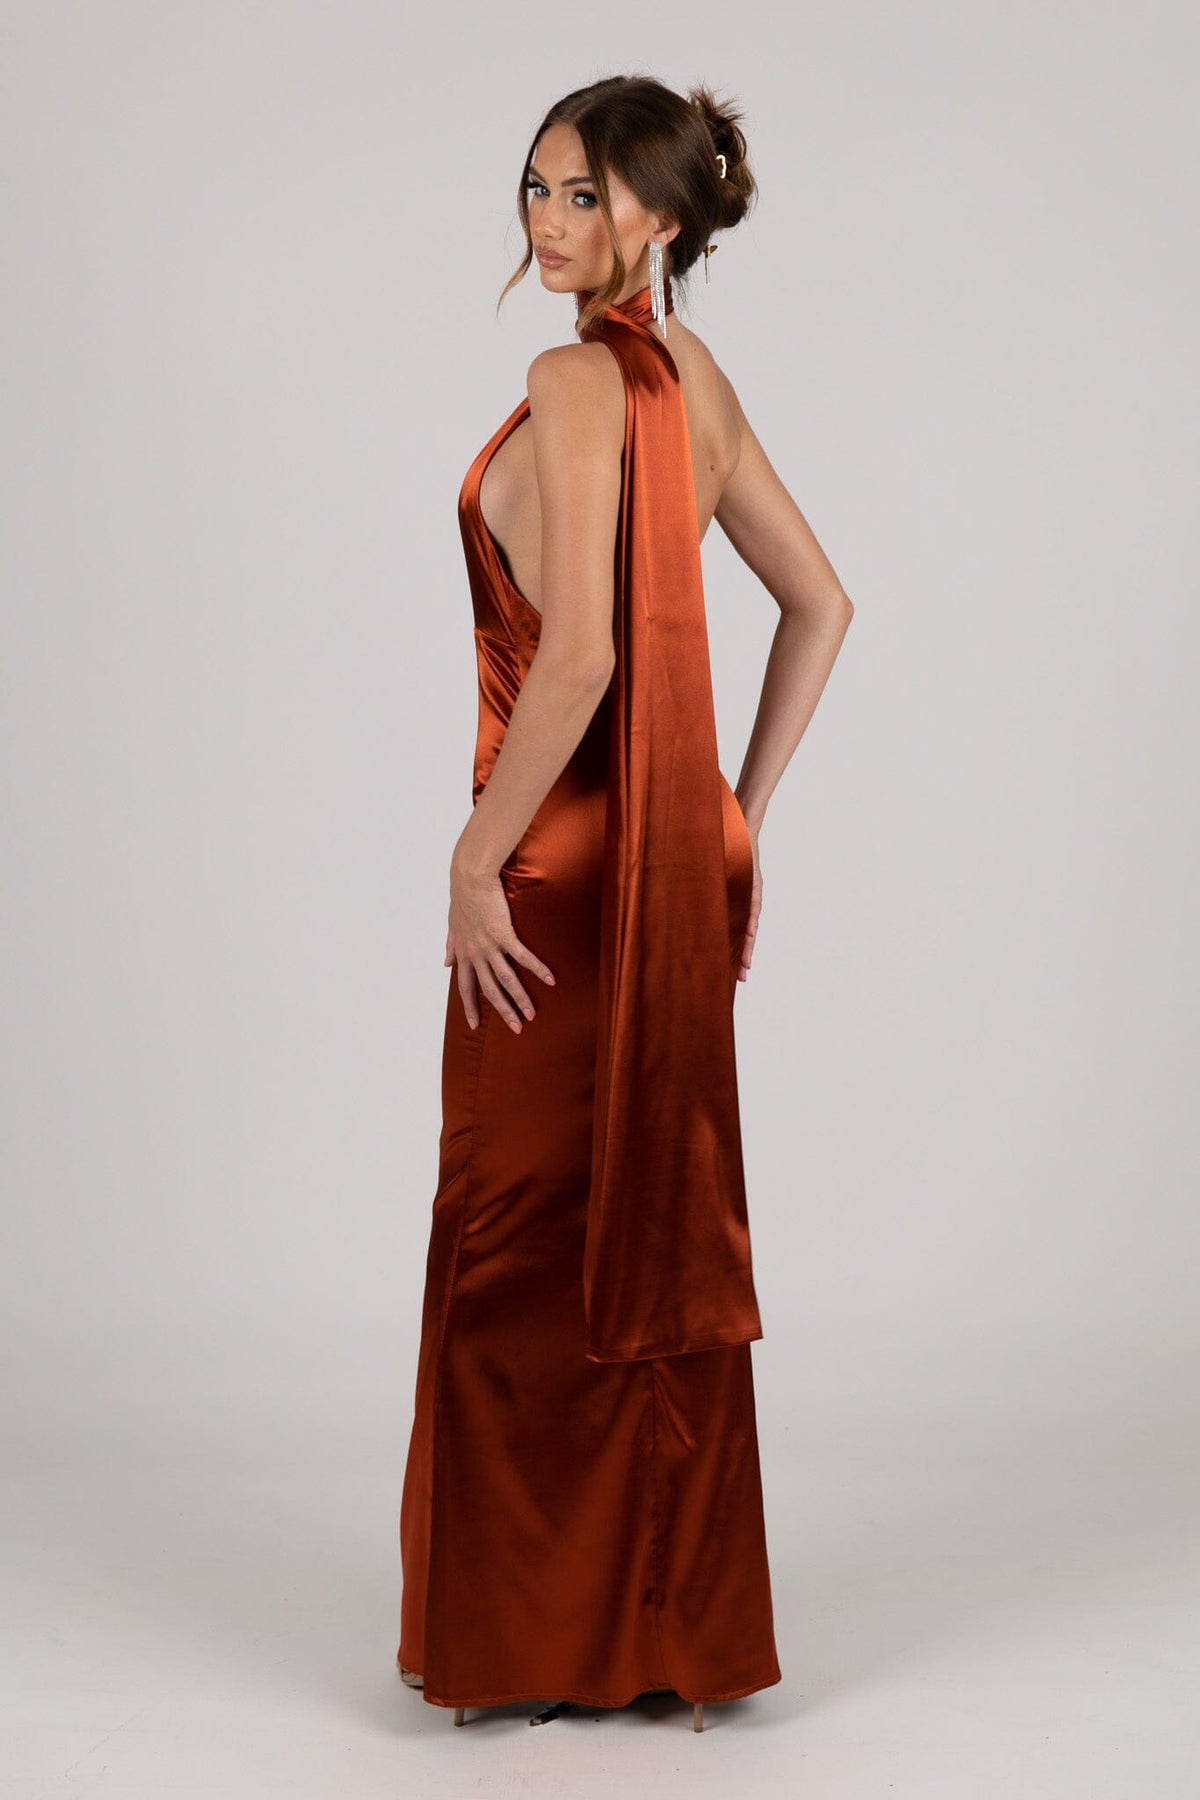 Long Scarf Sash of Rust Burnt Orange Coloured Satin Column Maxi Dress with Asymmetrical One Shoulder Neckline